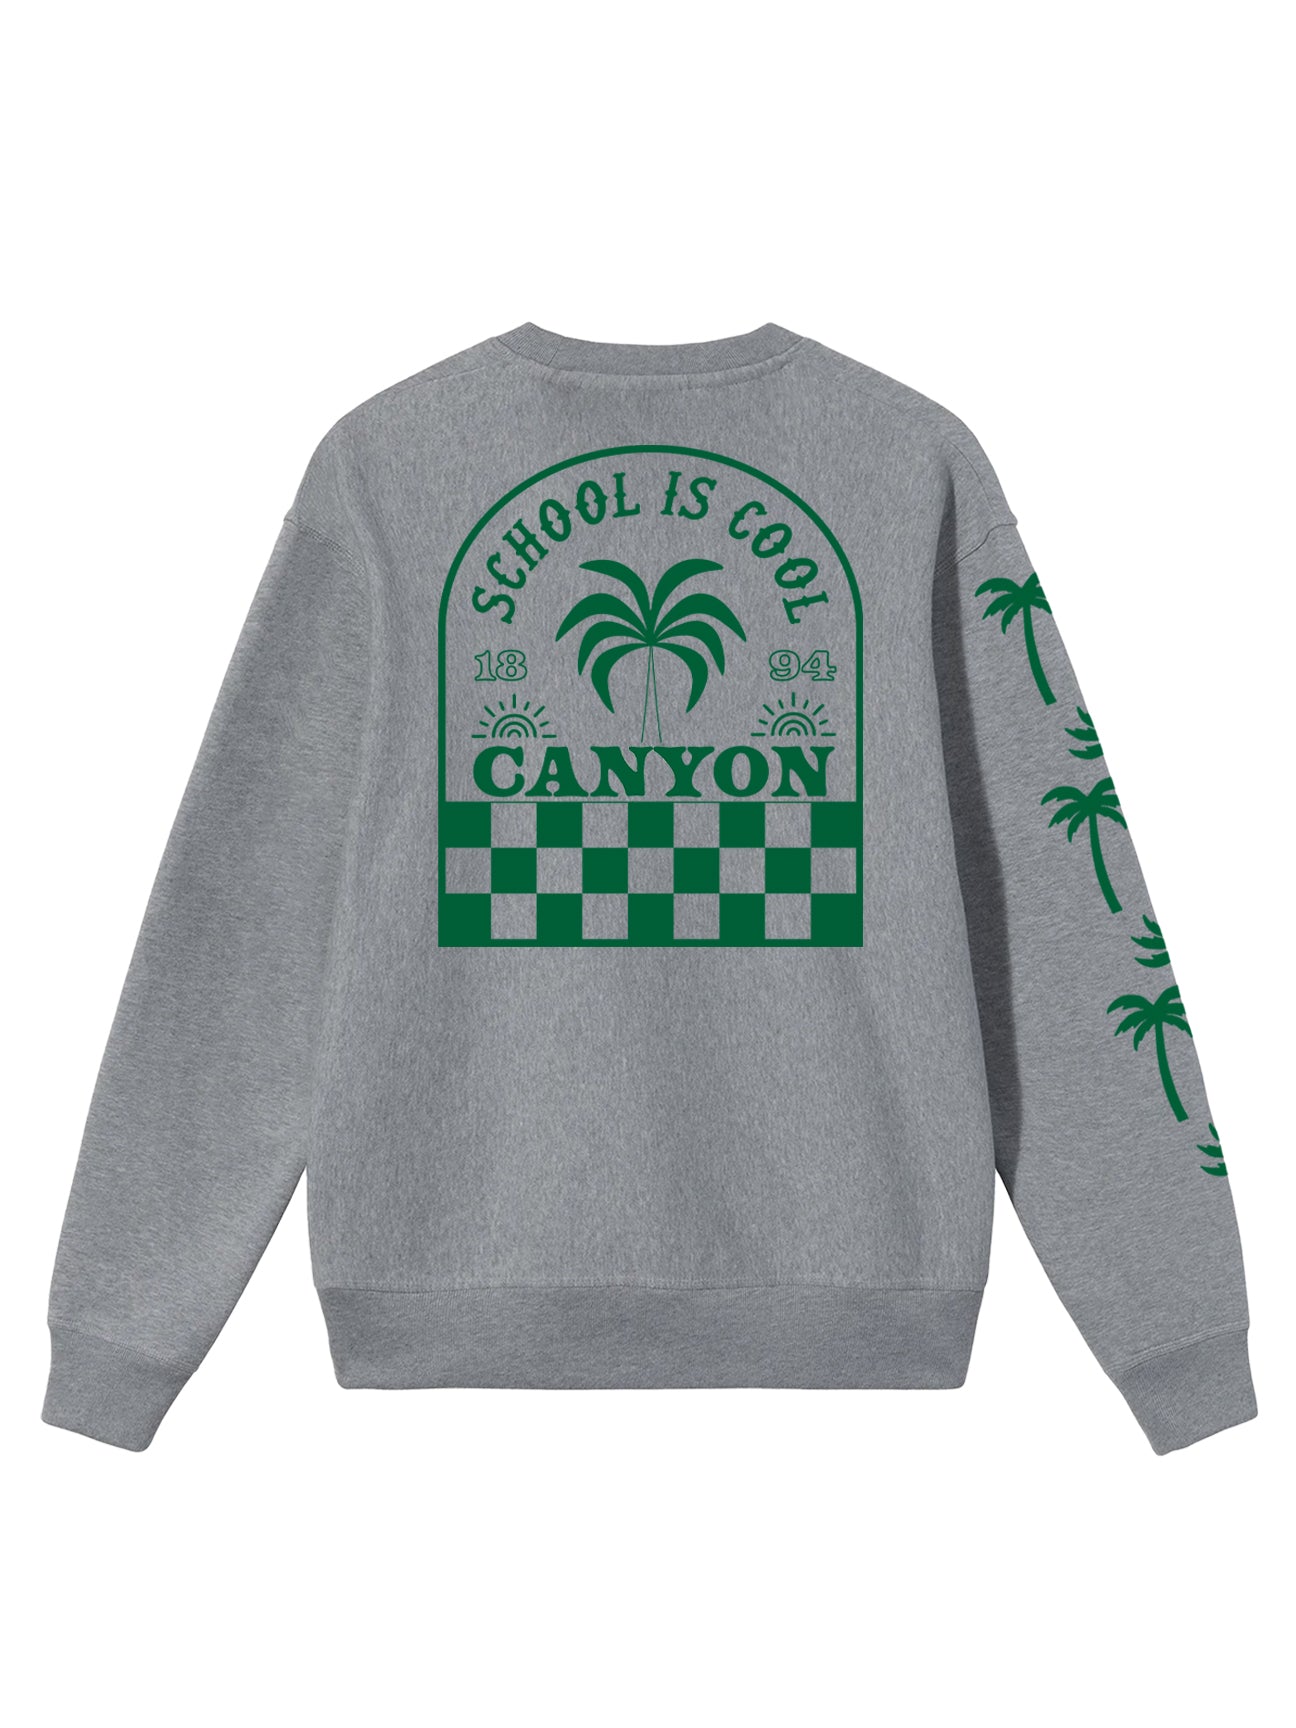 Canyon Adult School is Cool Pullover Sweatshirt